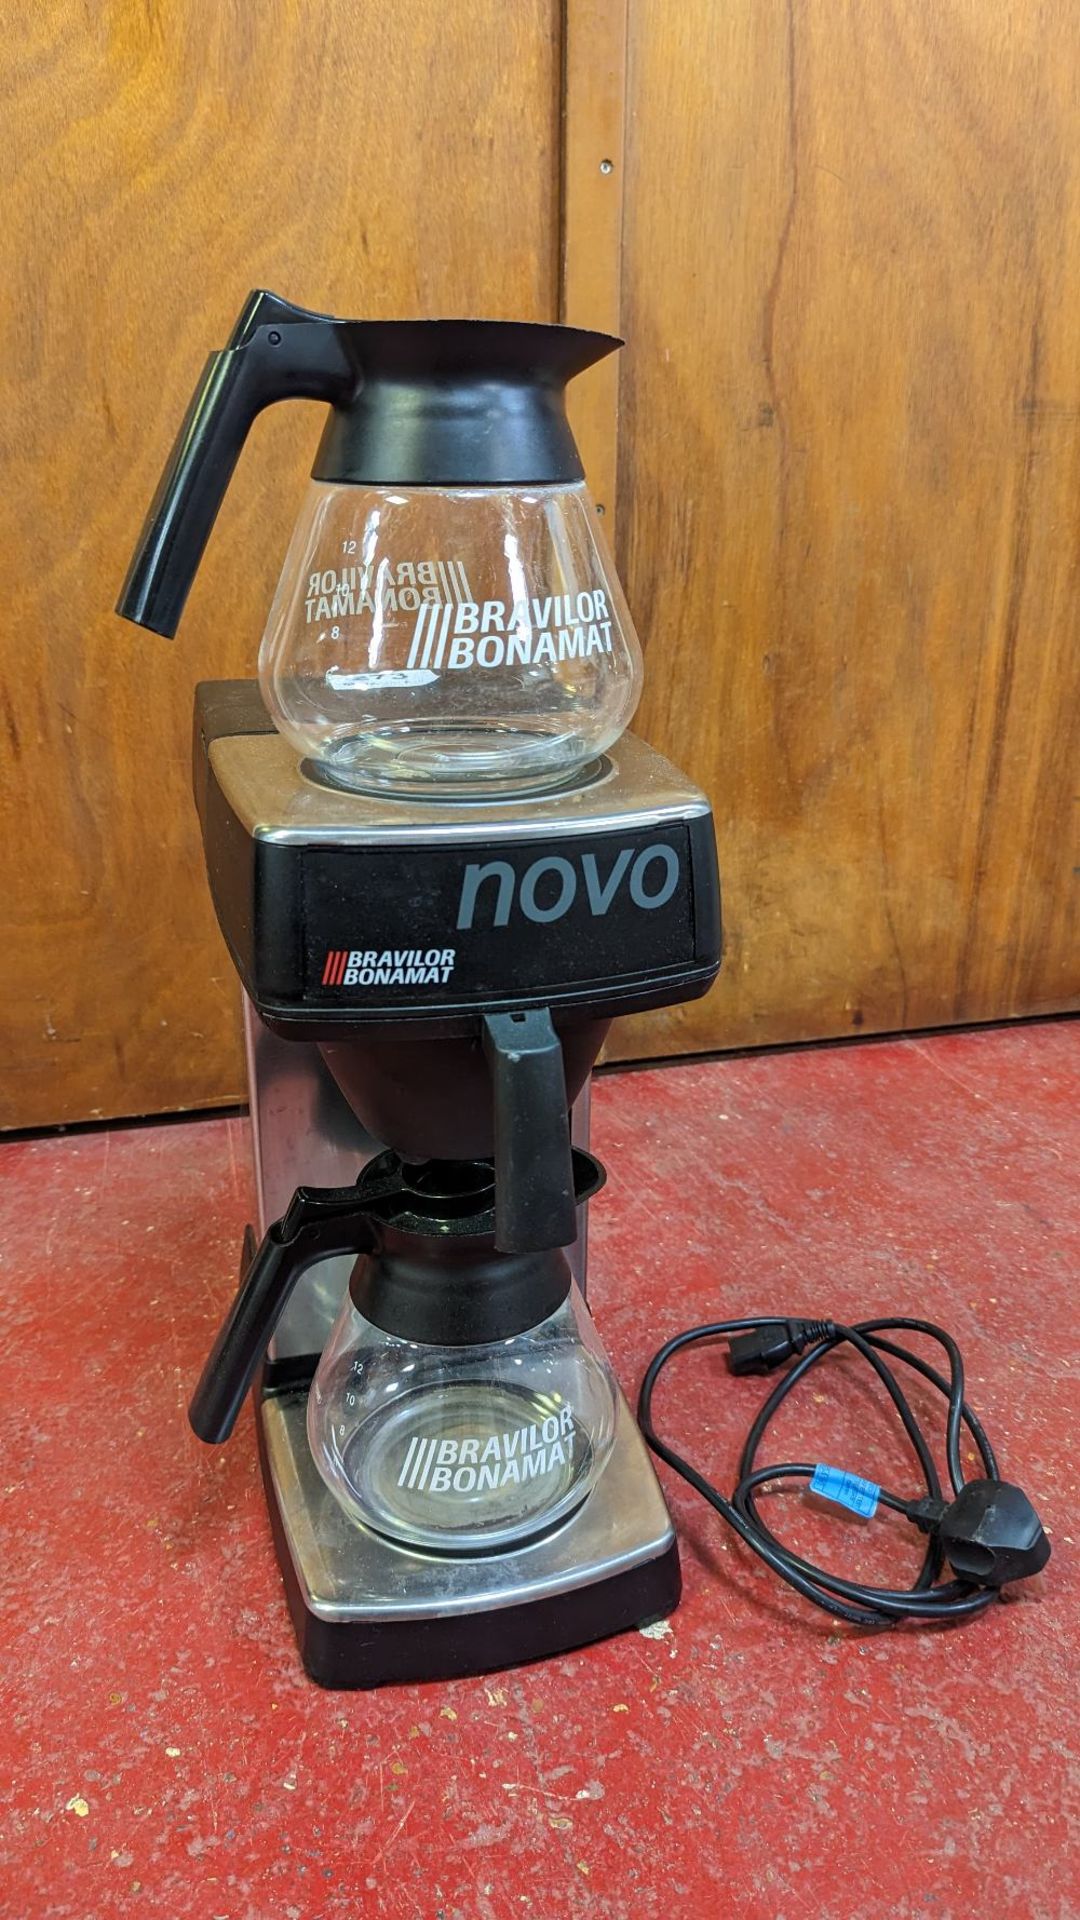 Novo Bravilor Bonamat coffee machine